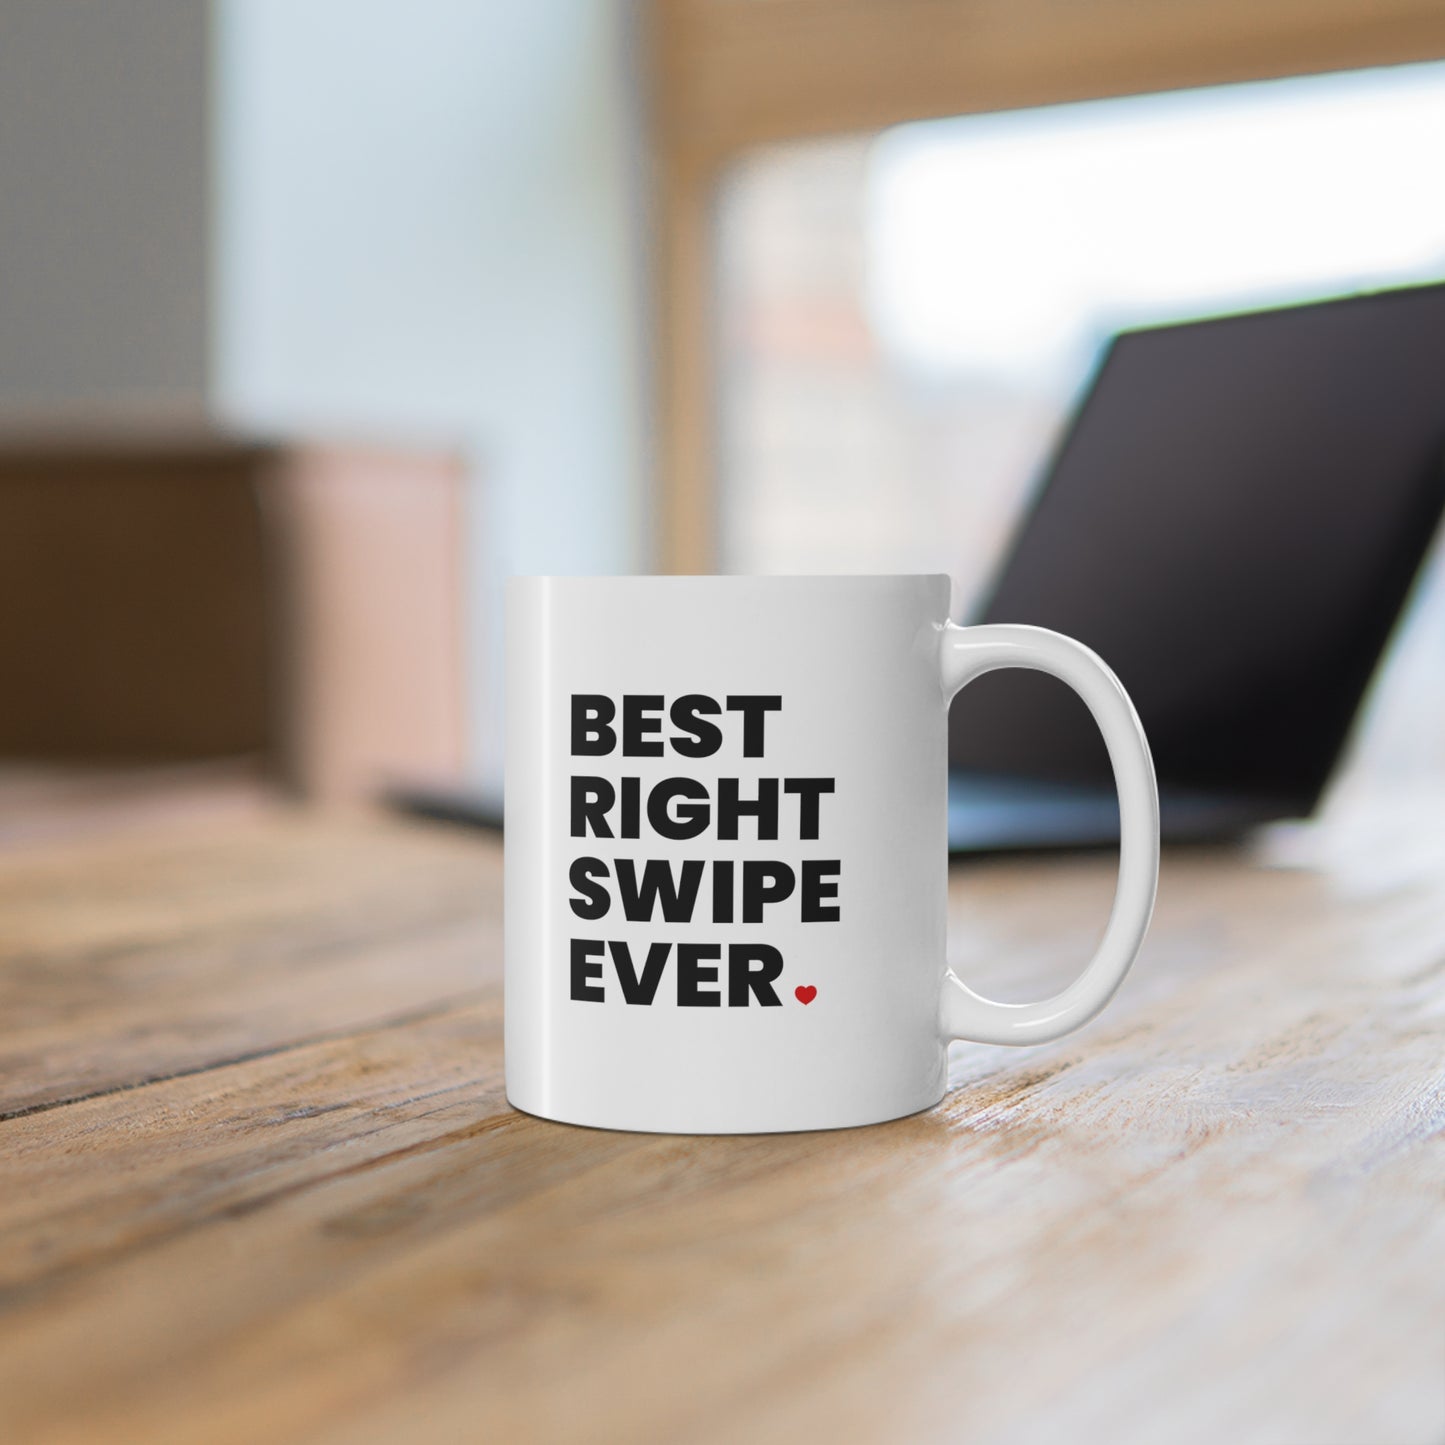 11oz ceramic mug with quote Best Right Swipe Ever